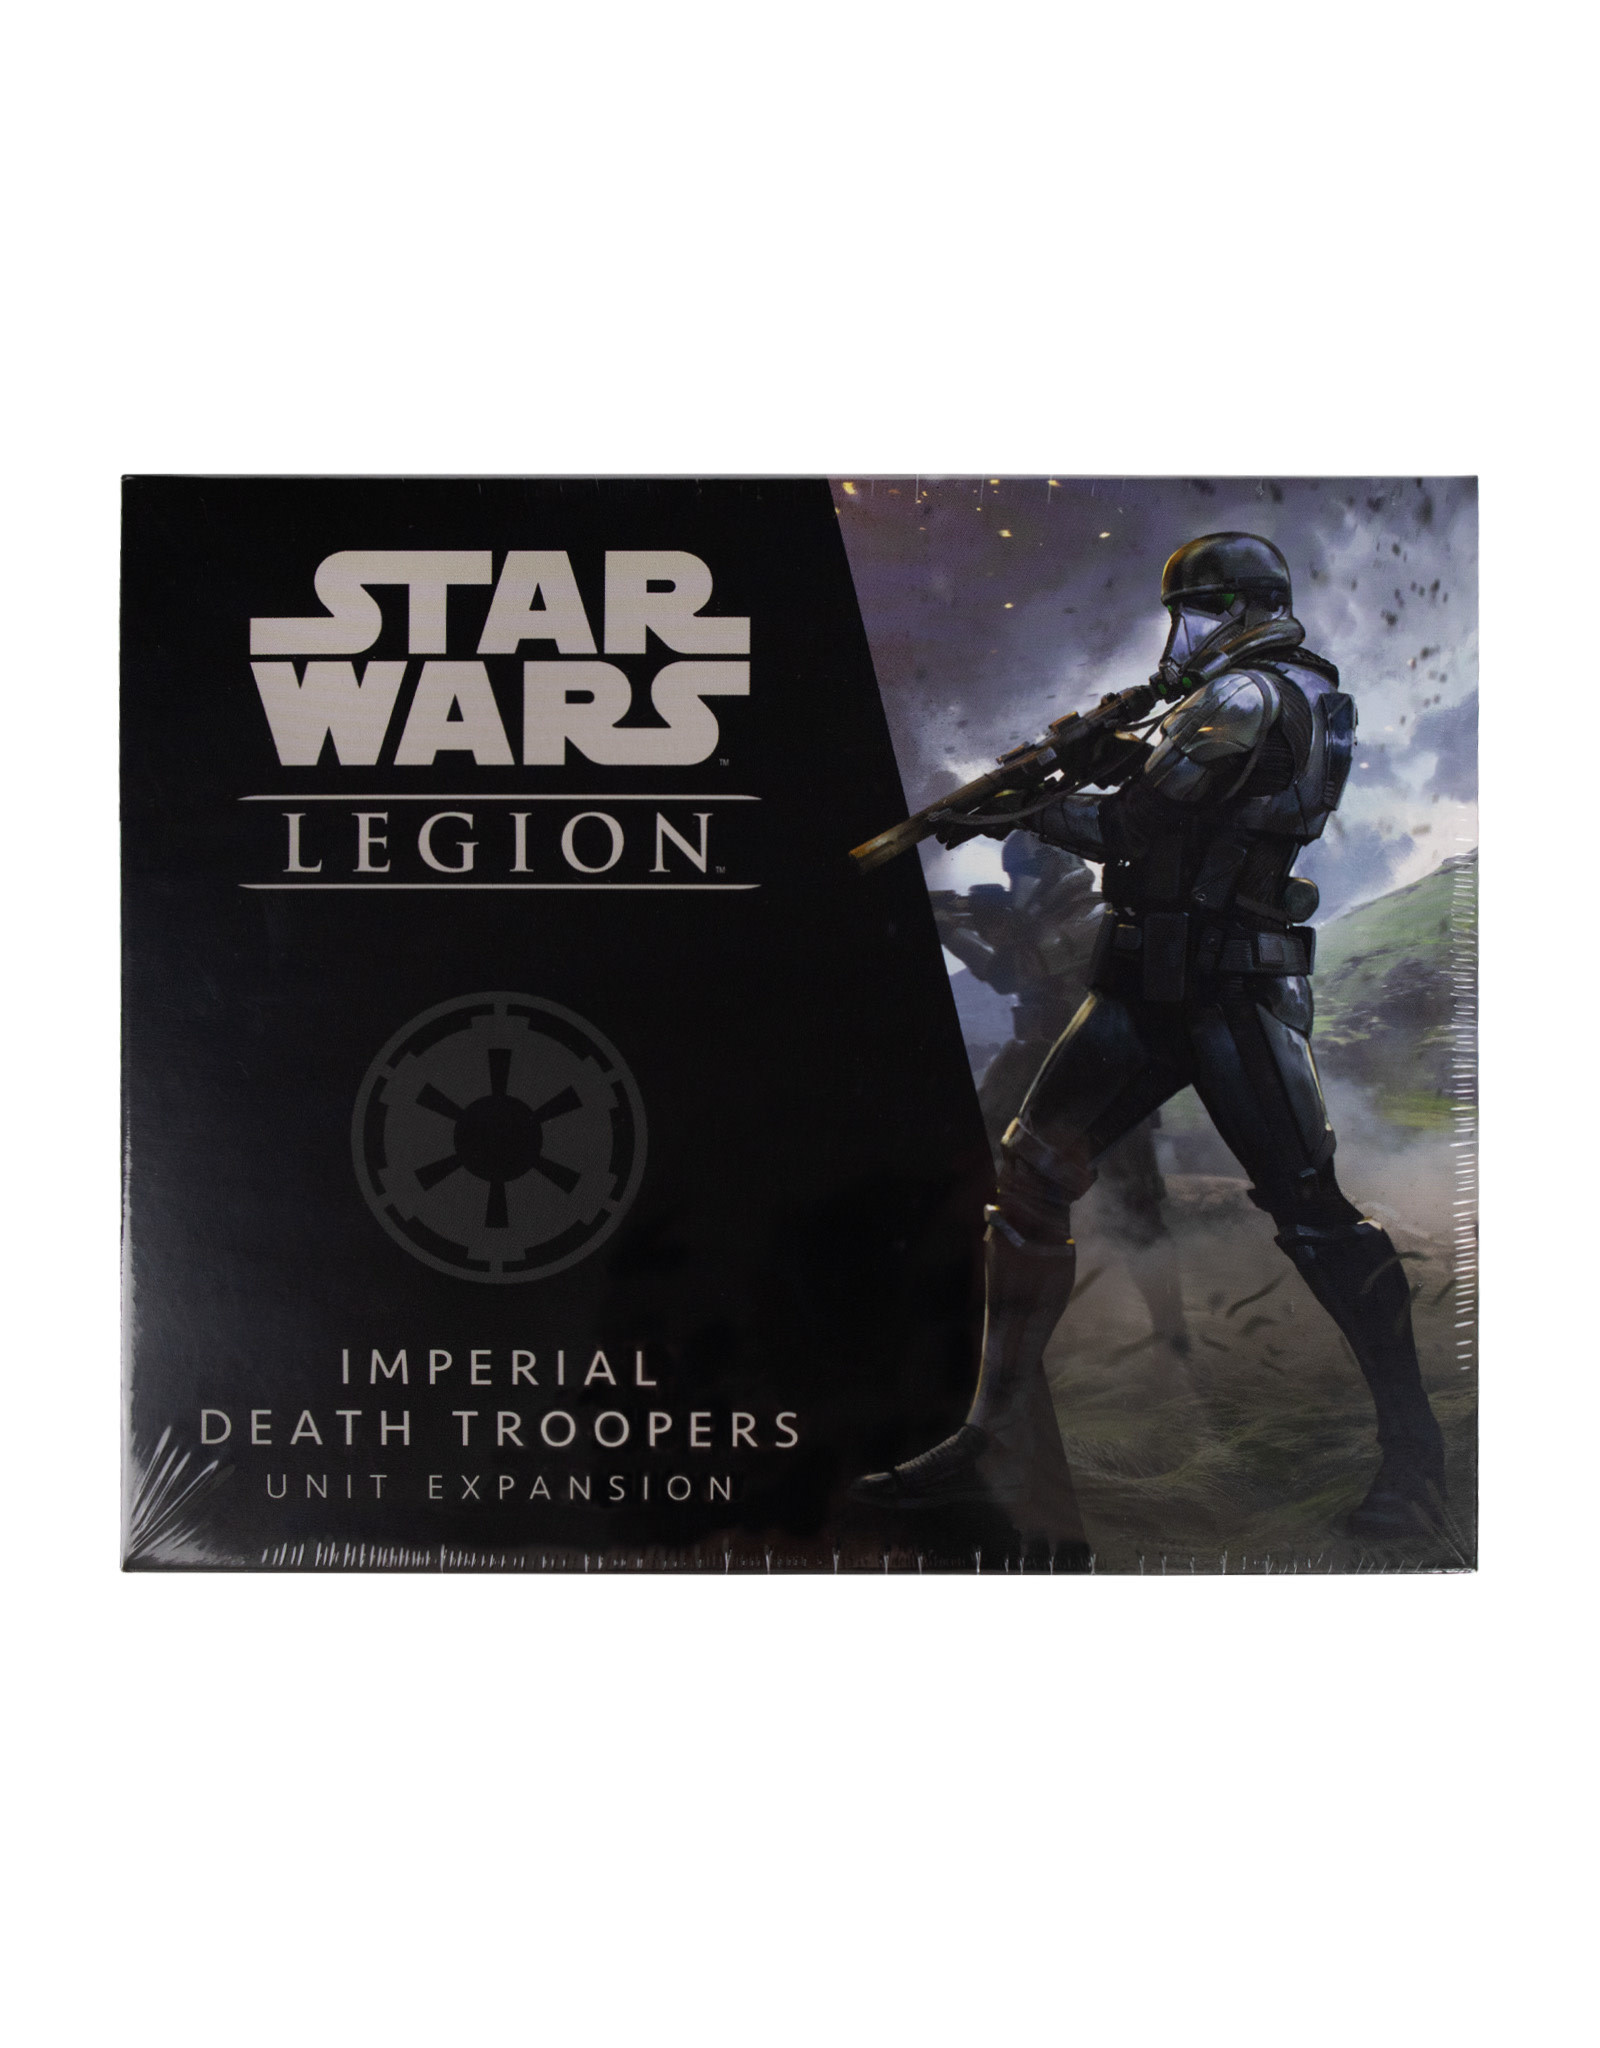 STAR WARS LEGION Star Wars Legion Imperial Death Troopers Unit Expansion